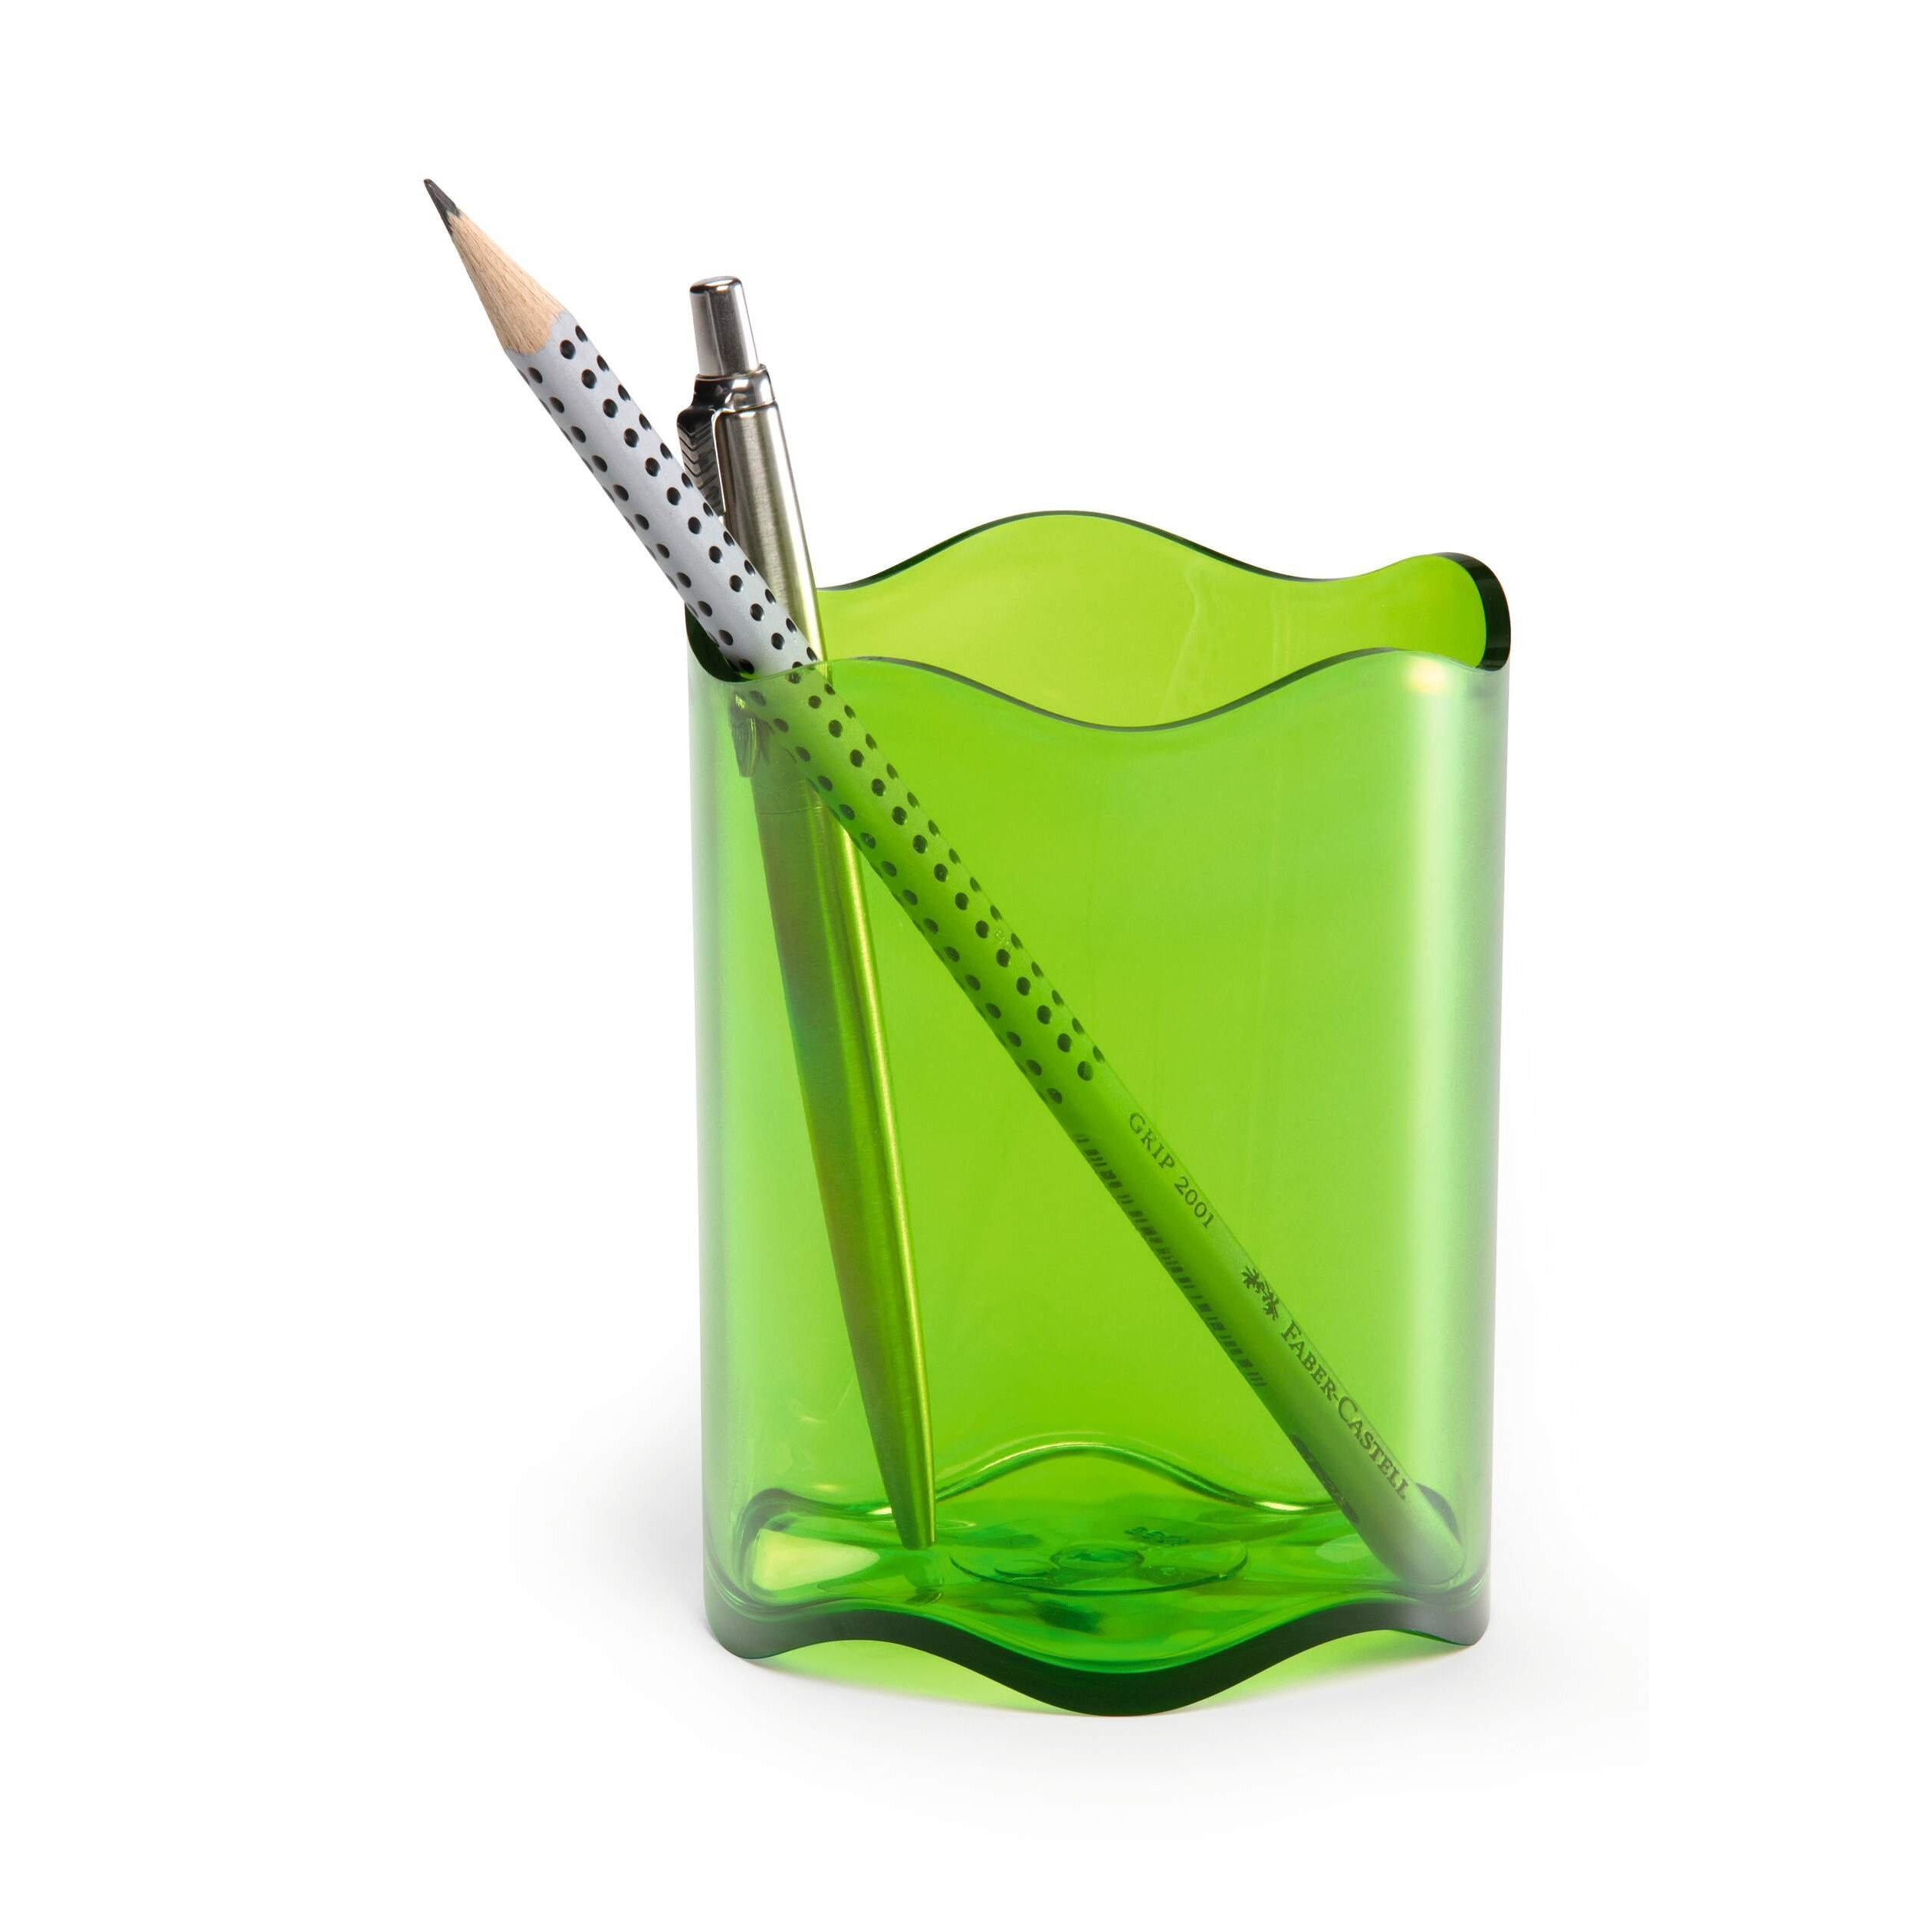 TREND Pen Pot Pencil Holder Desk Tidy Organizer Cup - Clear Green - image 1